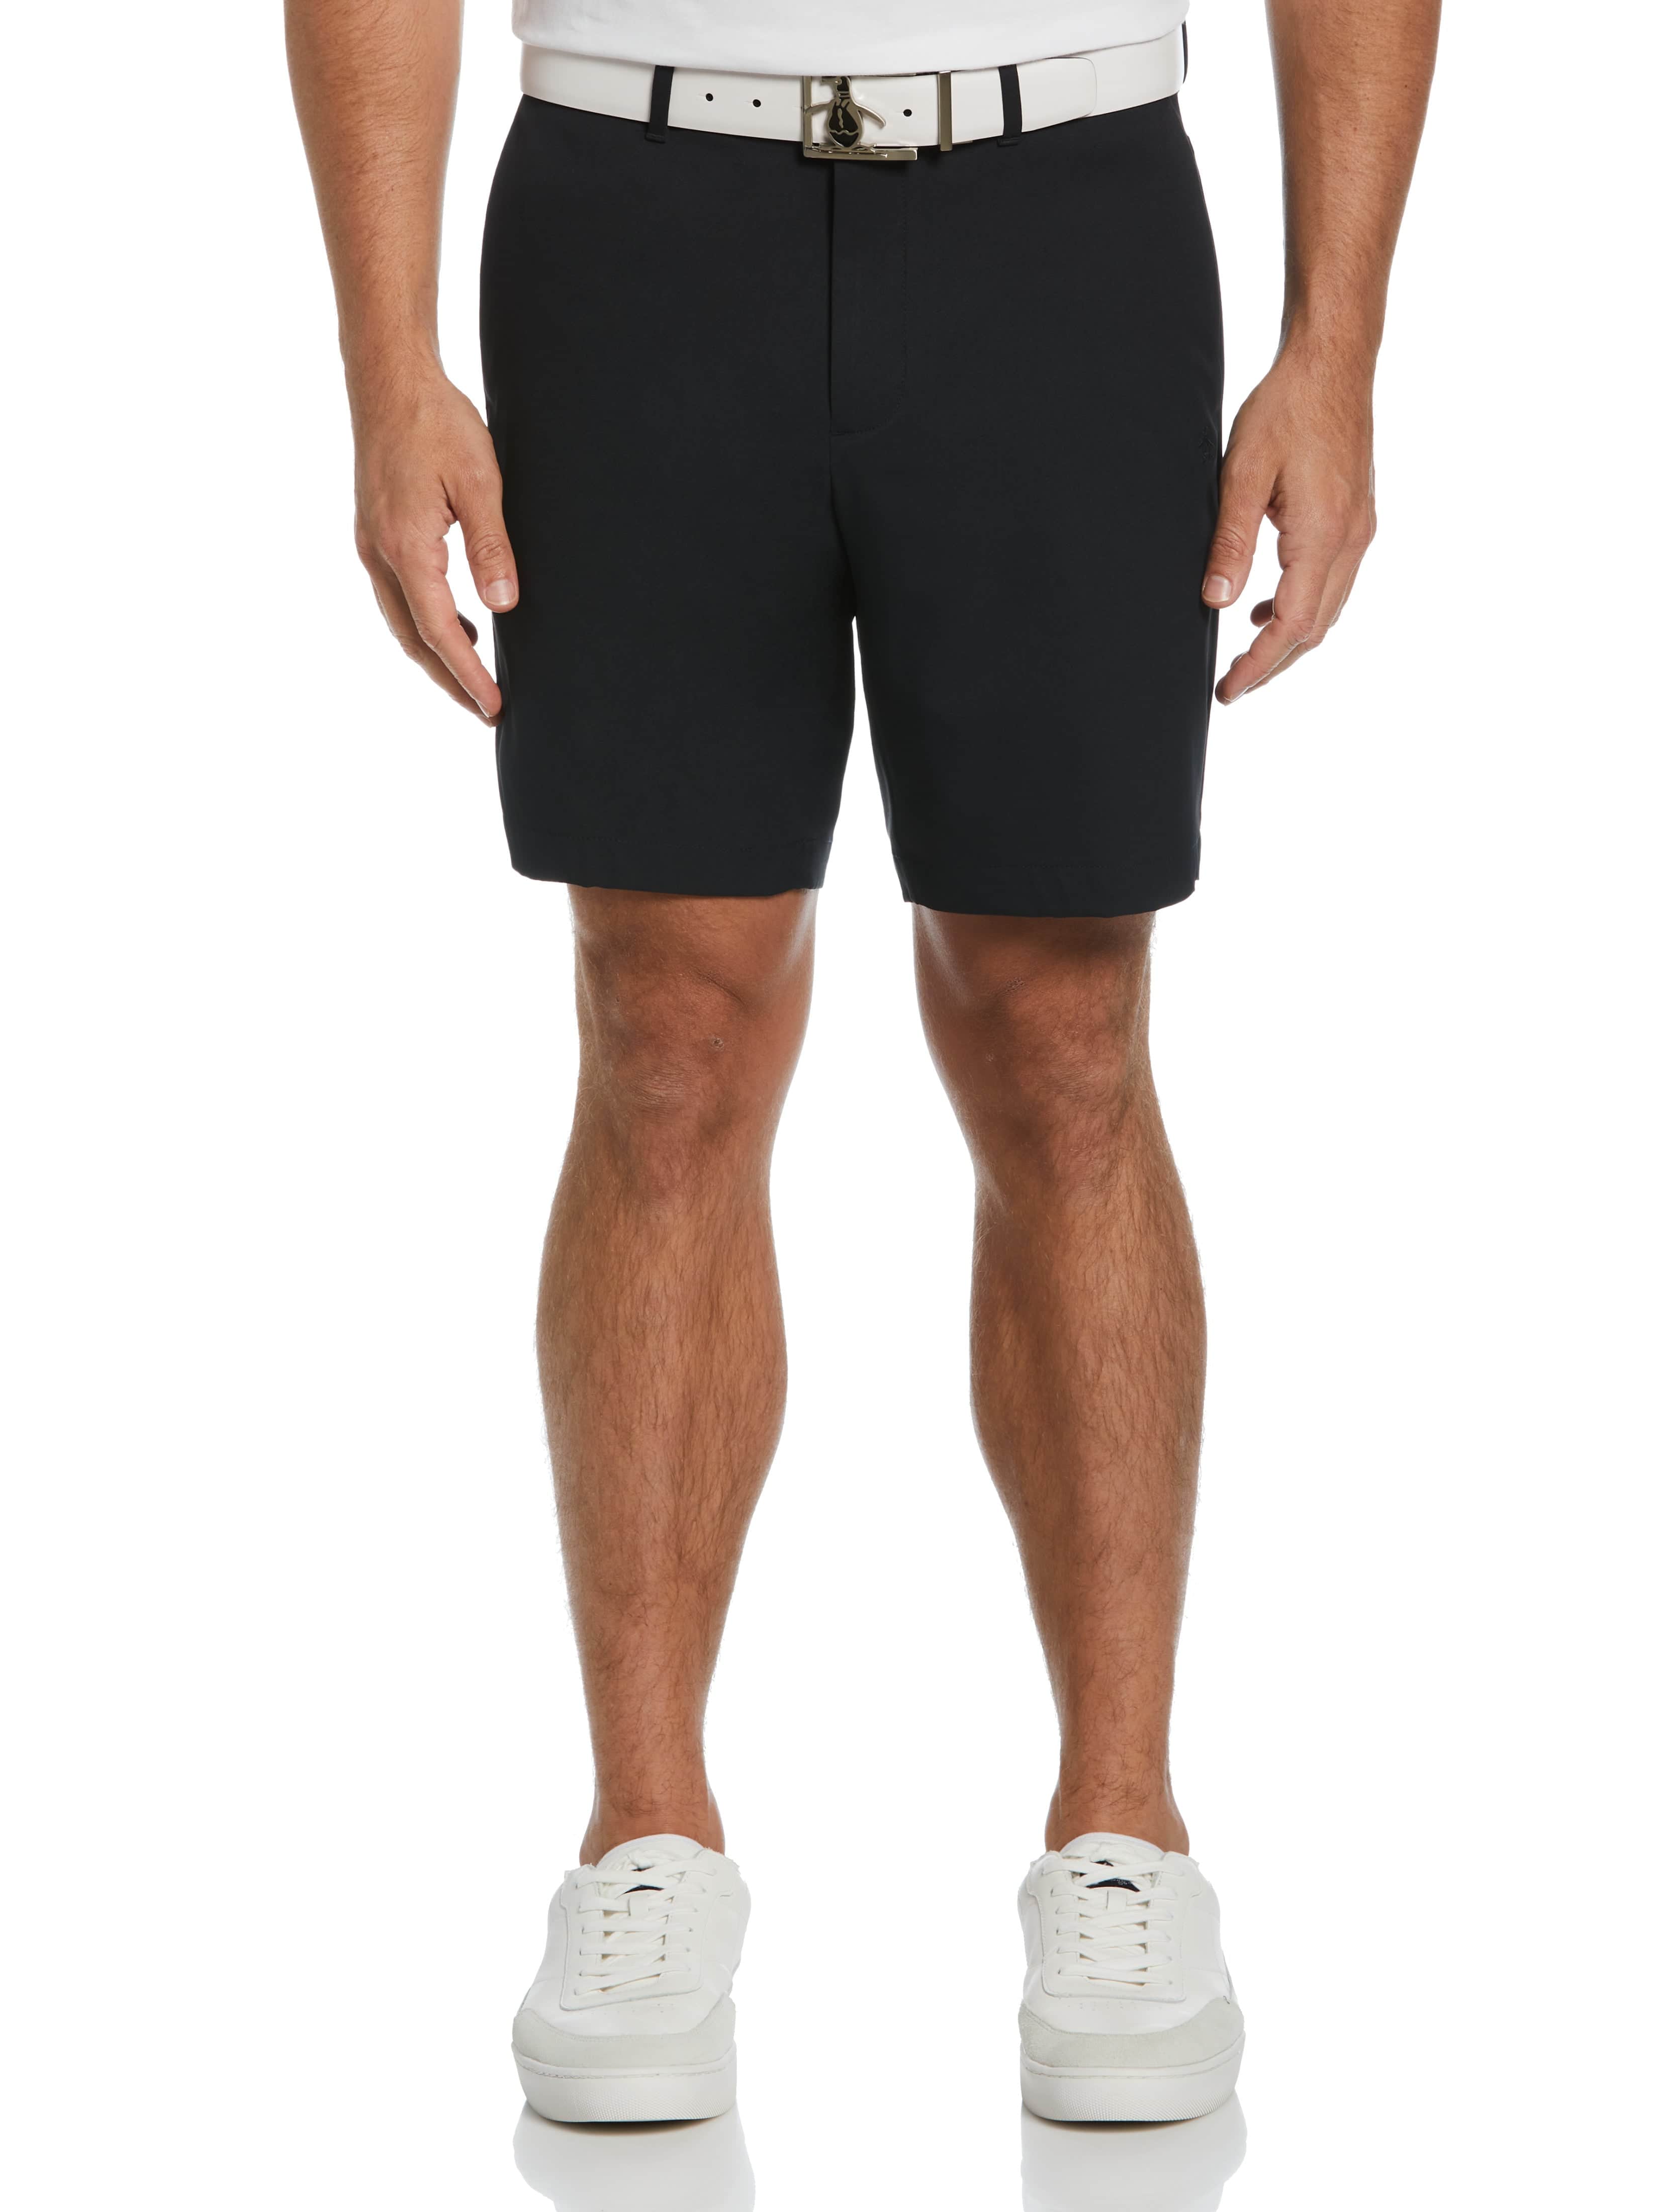 Original Penguin Mens Front Golf Solid Flat Shorts, Size 36, Black, 100% Polyester | Golf Apparel Shop